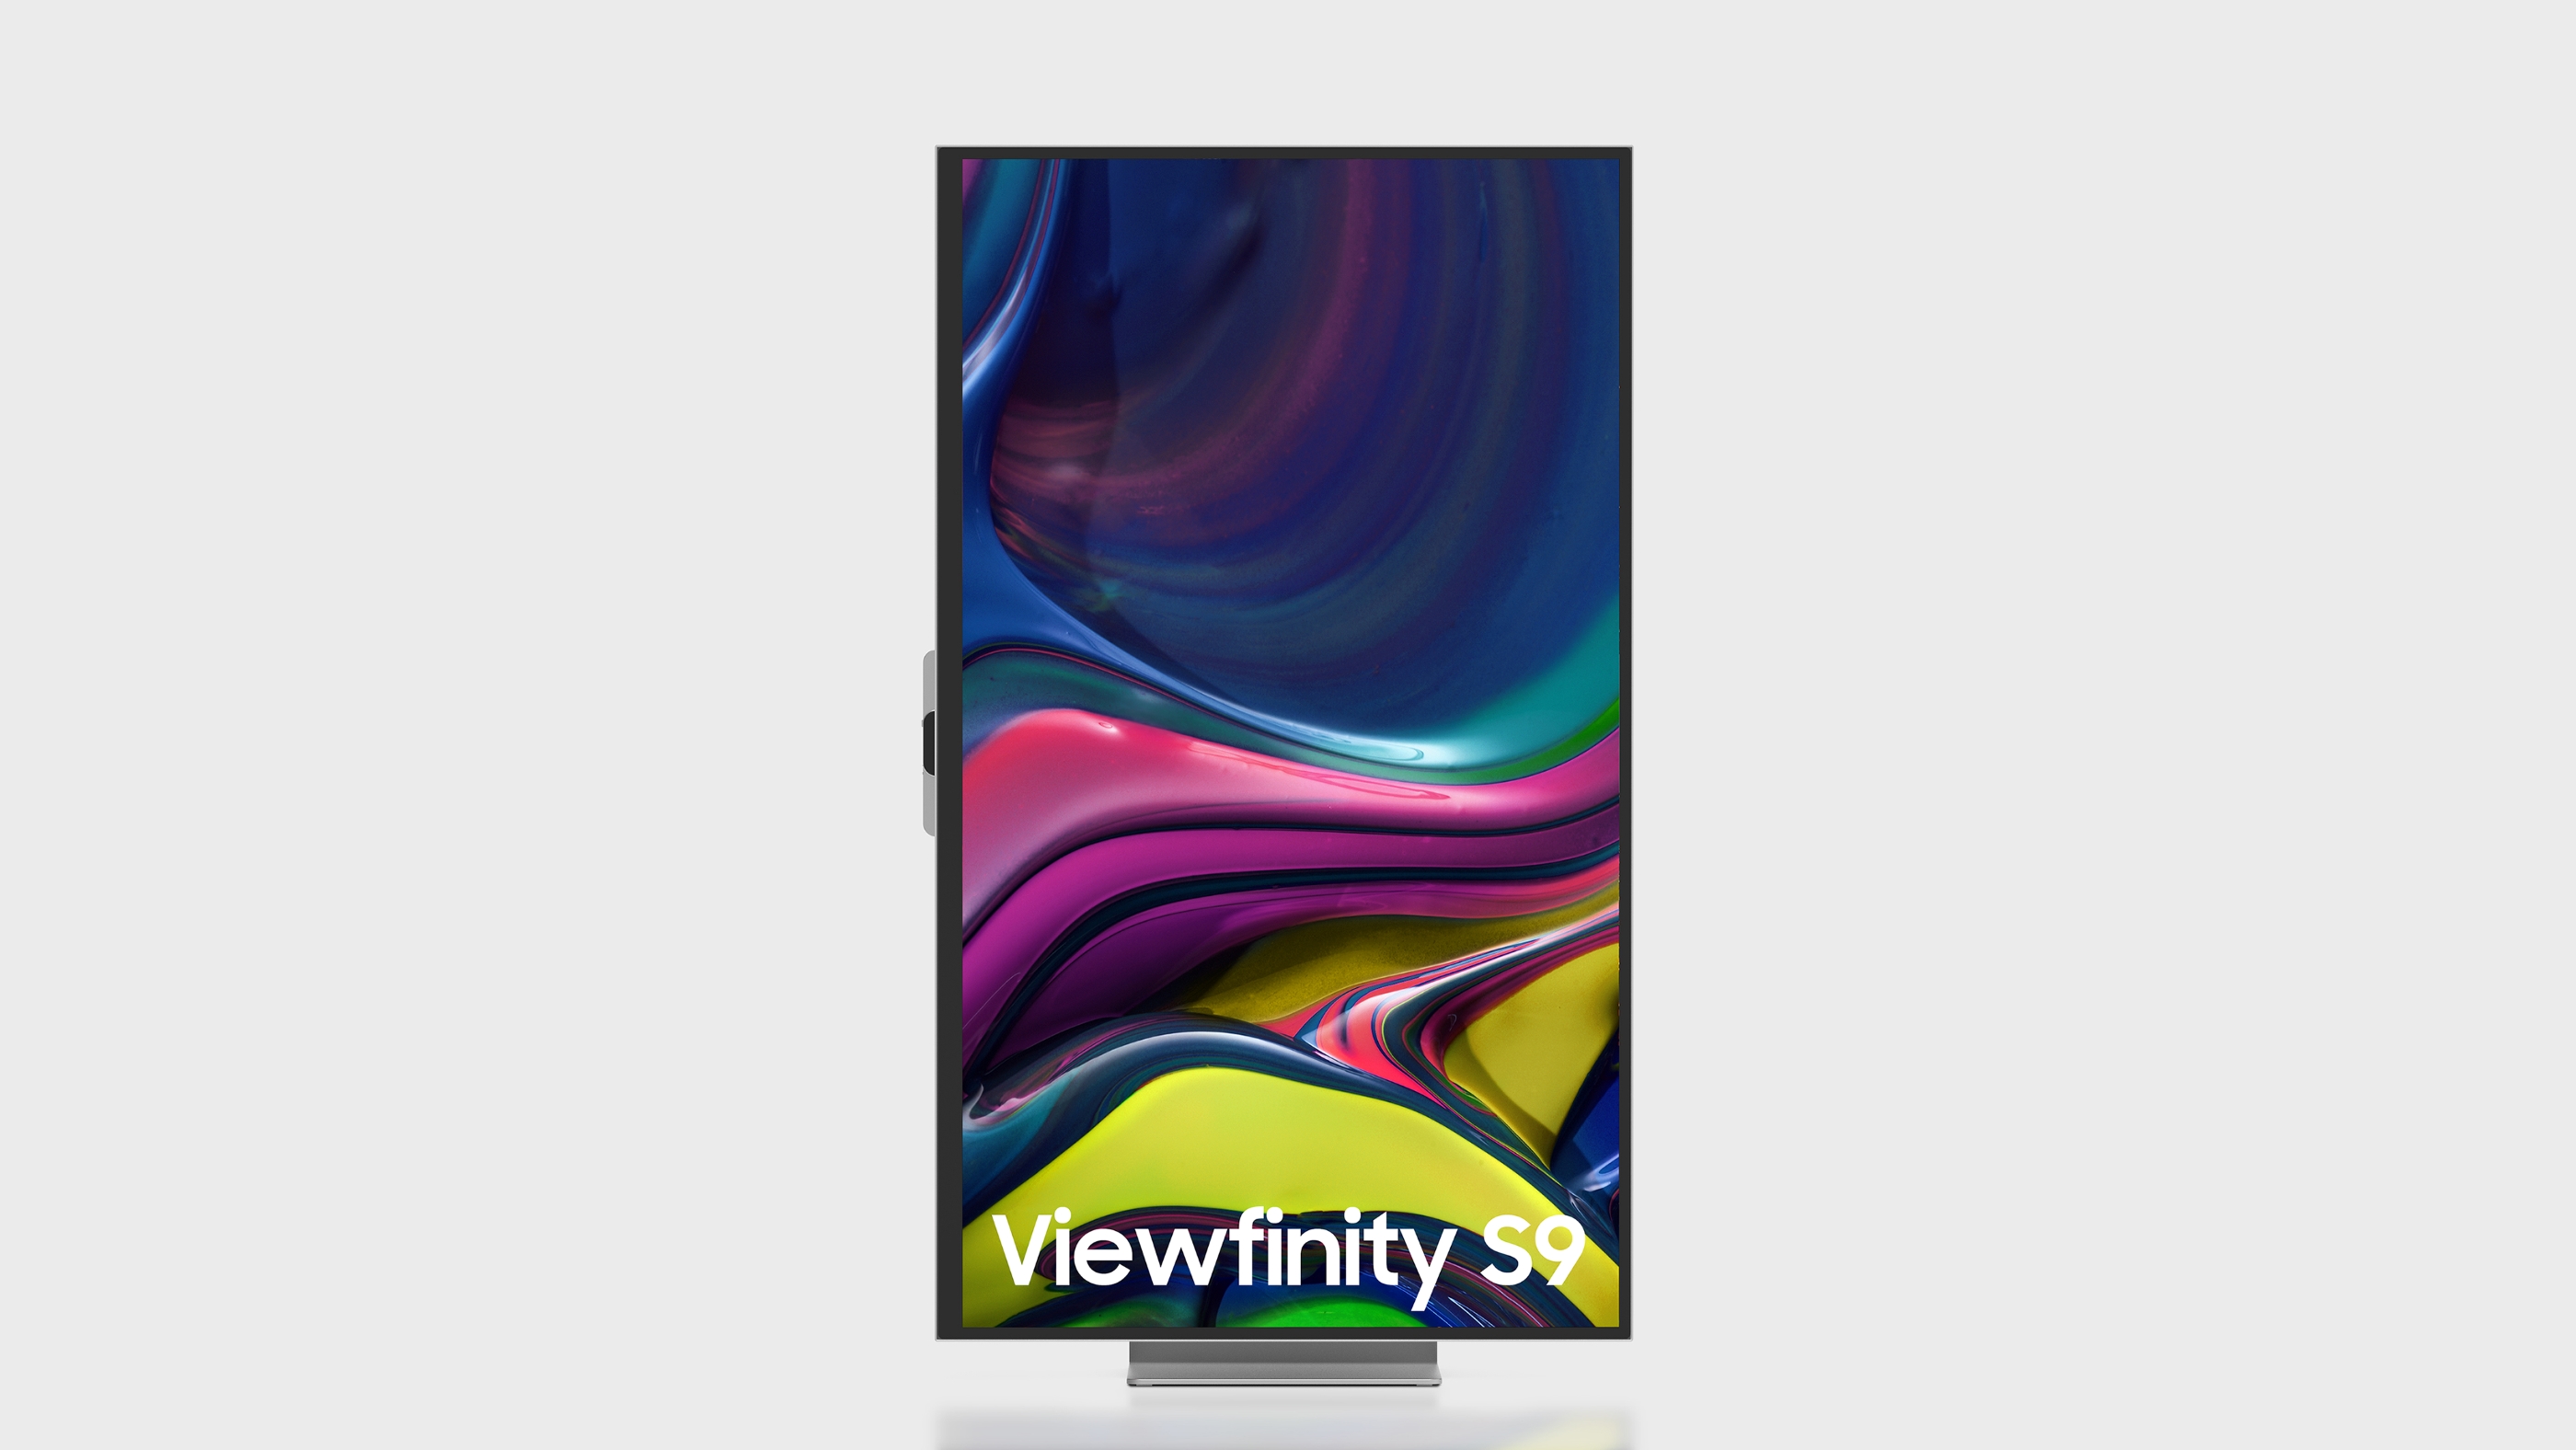 viewfinity_s9_s90pc_front_por